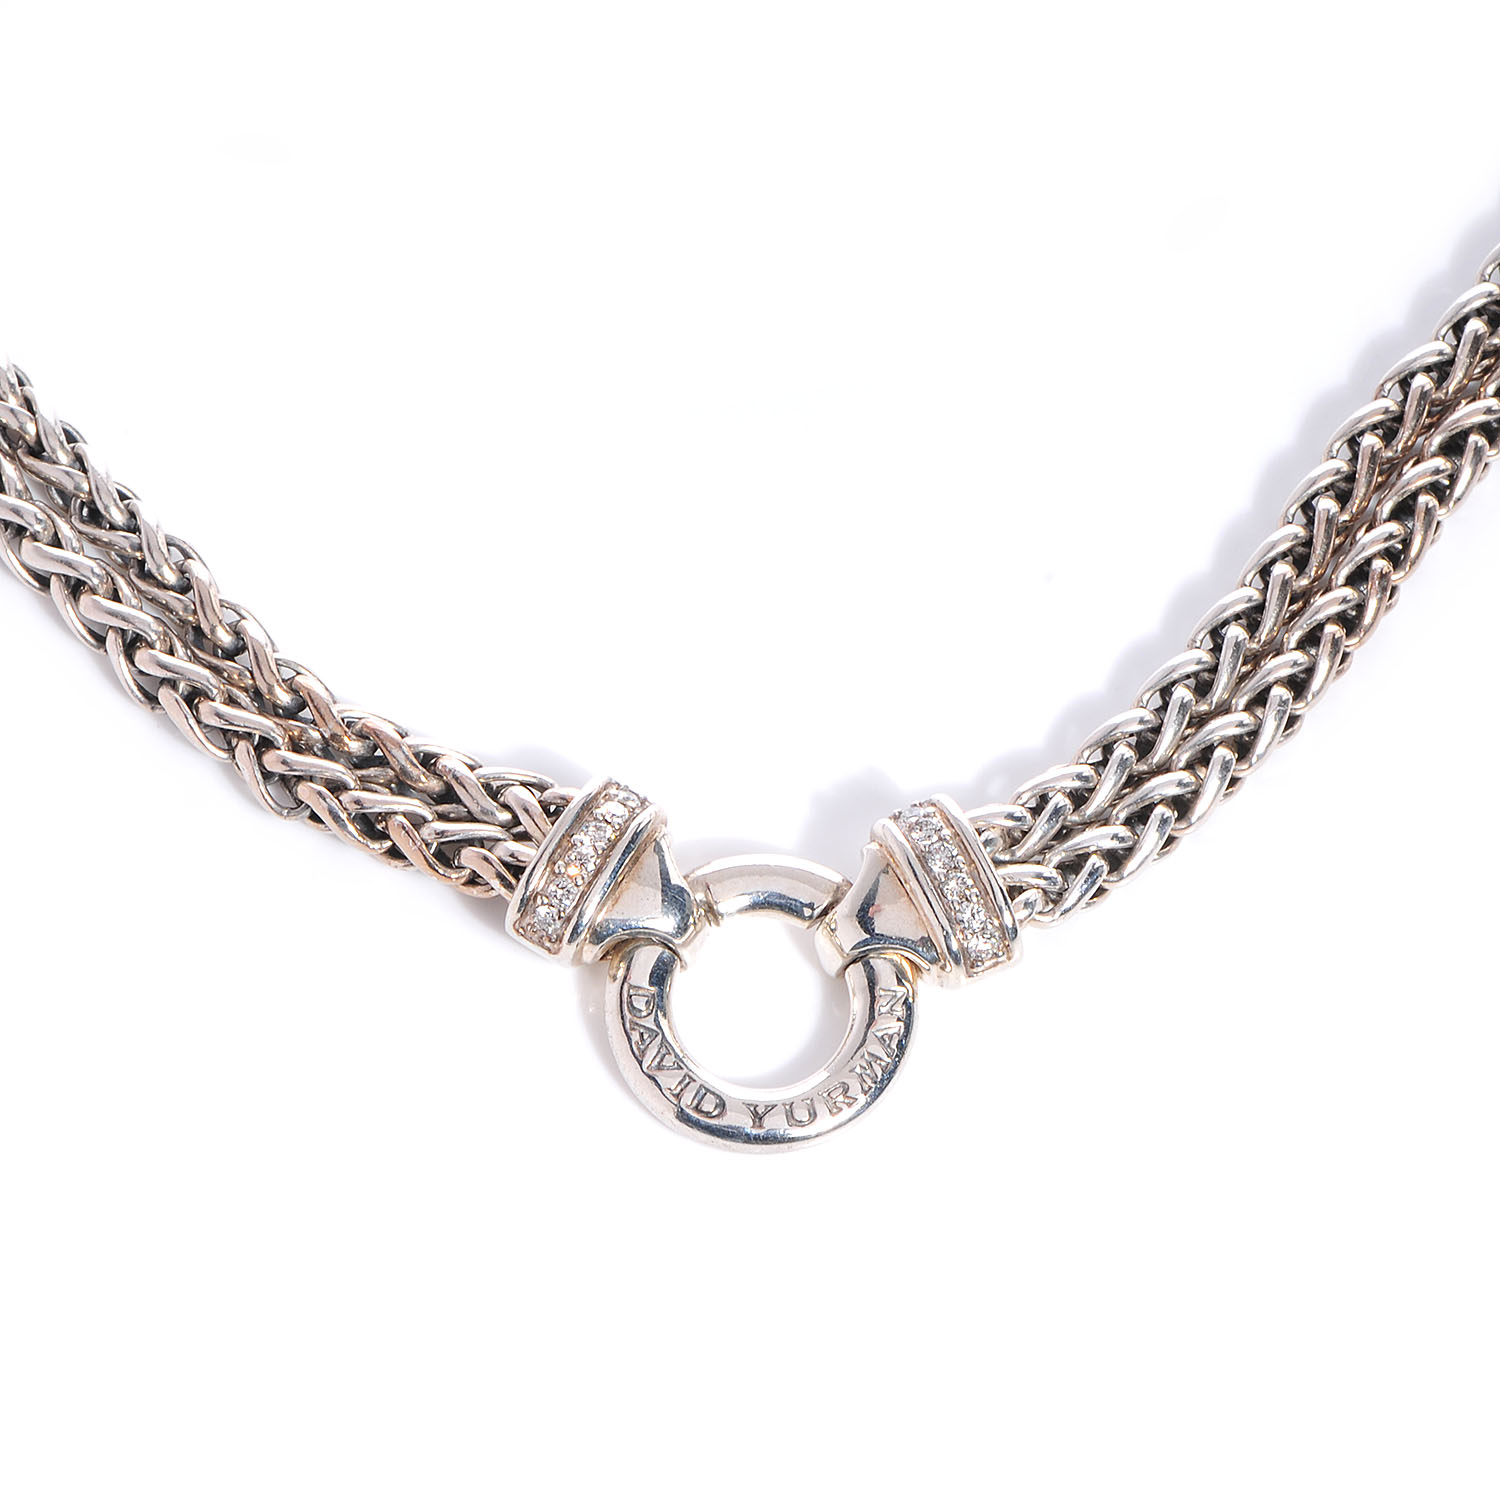 DAVID YURMAN Sterling Silver Pave Diamond Double Wheat Chain Necklace 70096